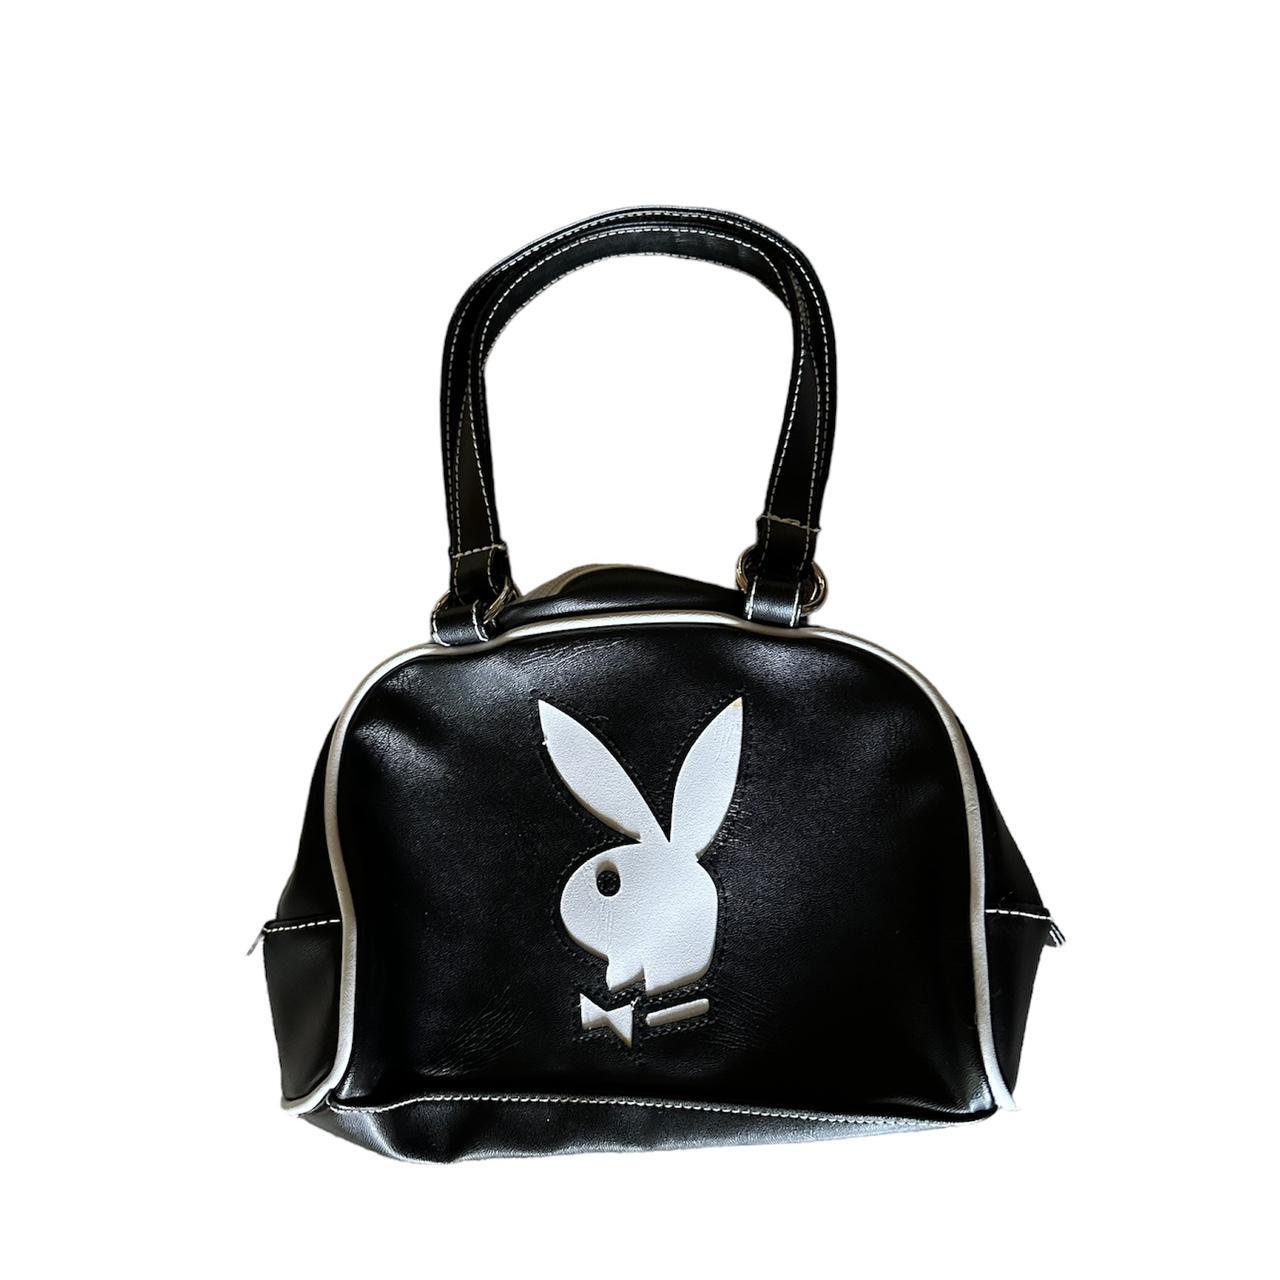 Free: PLAYBOY BUNNY Handbag Purse Satchel Black with Purple Bunny & Hidden  Bunnies in Animal Print. - Handbags - Listia.com Auctions for Free Stuff